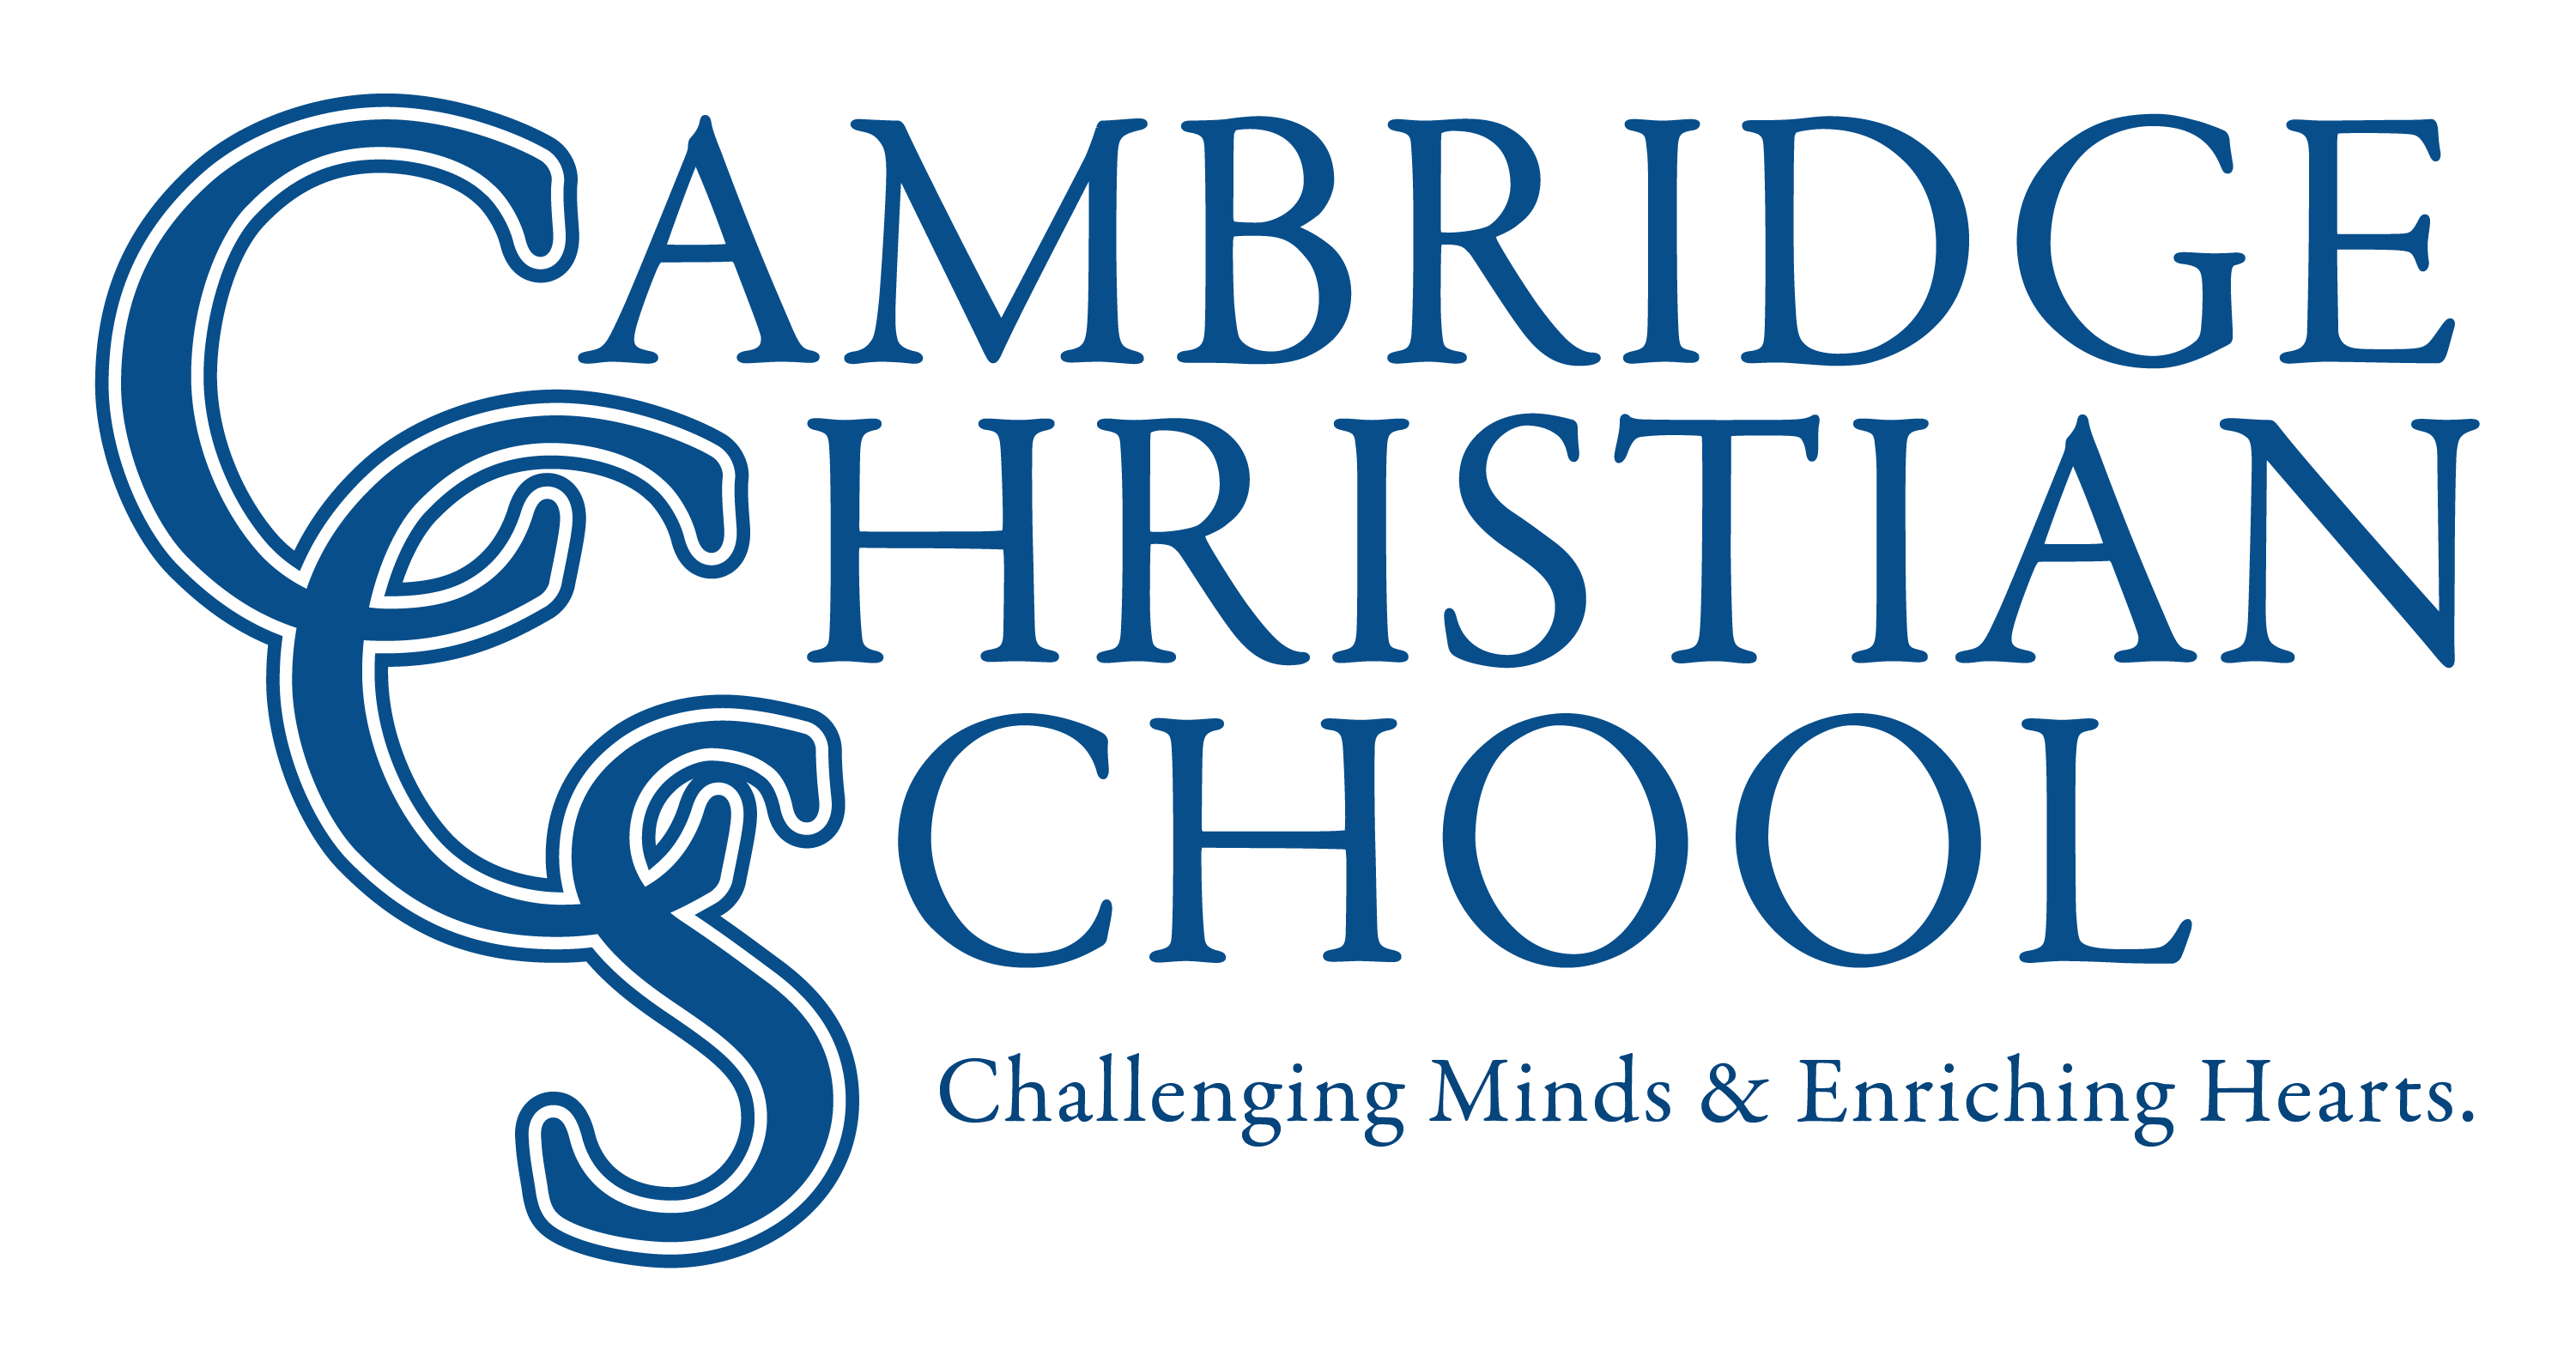 testimonials-cambridge-christian-school